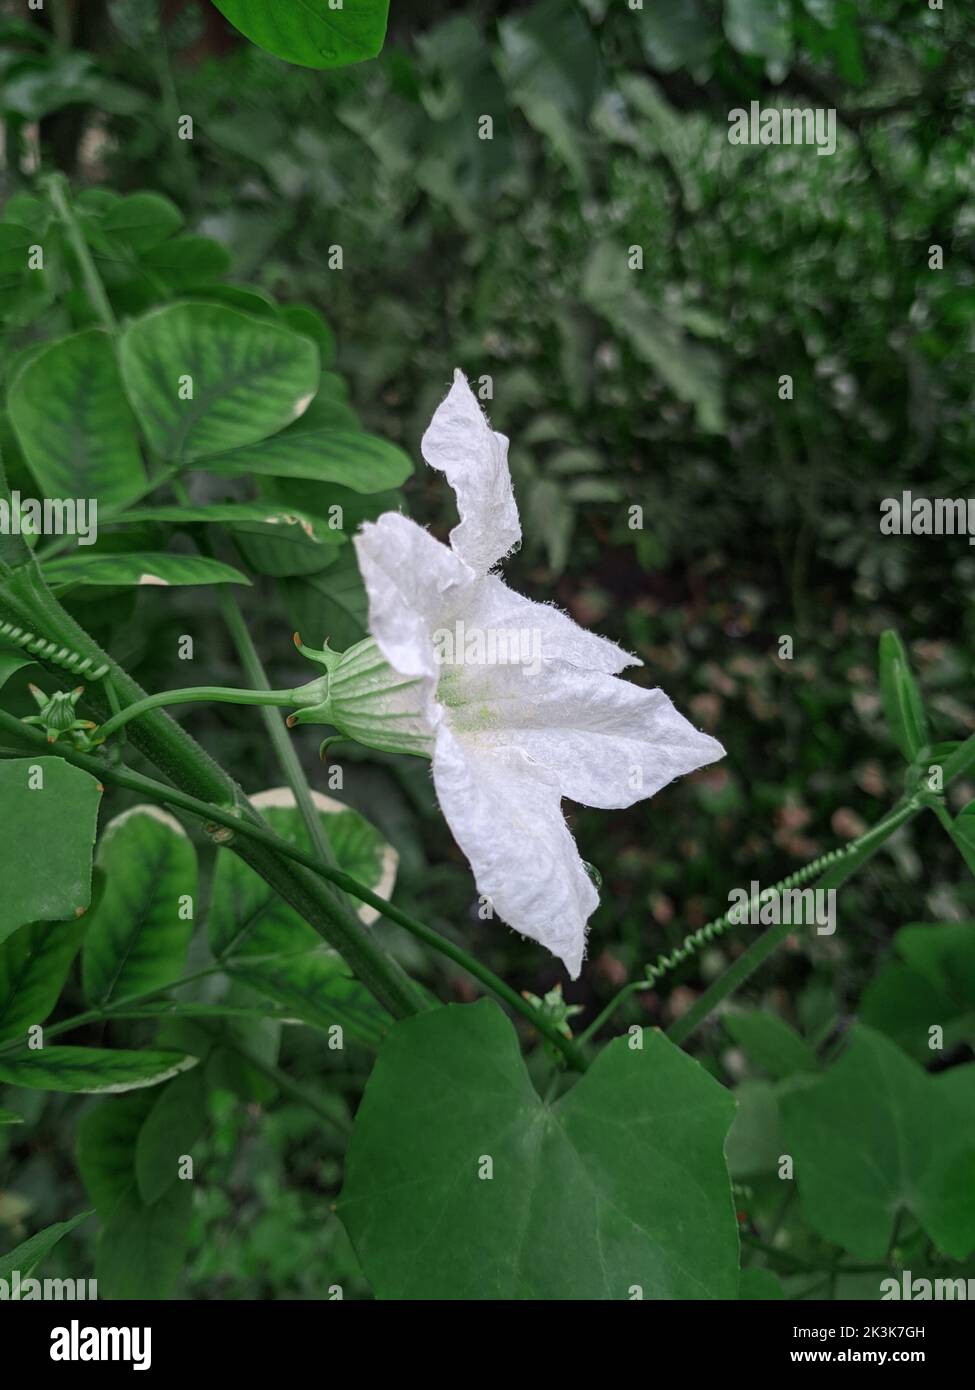 A vertical shot of a white Ivy Gourd flower in a garden Stock Photo